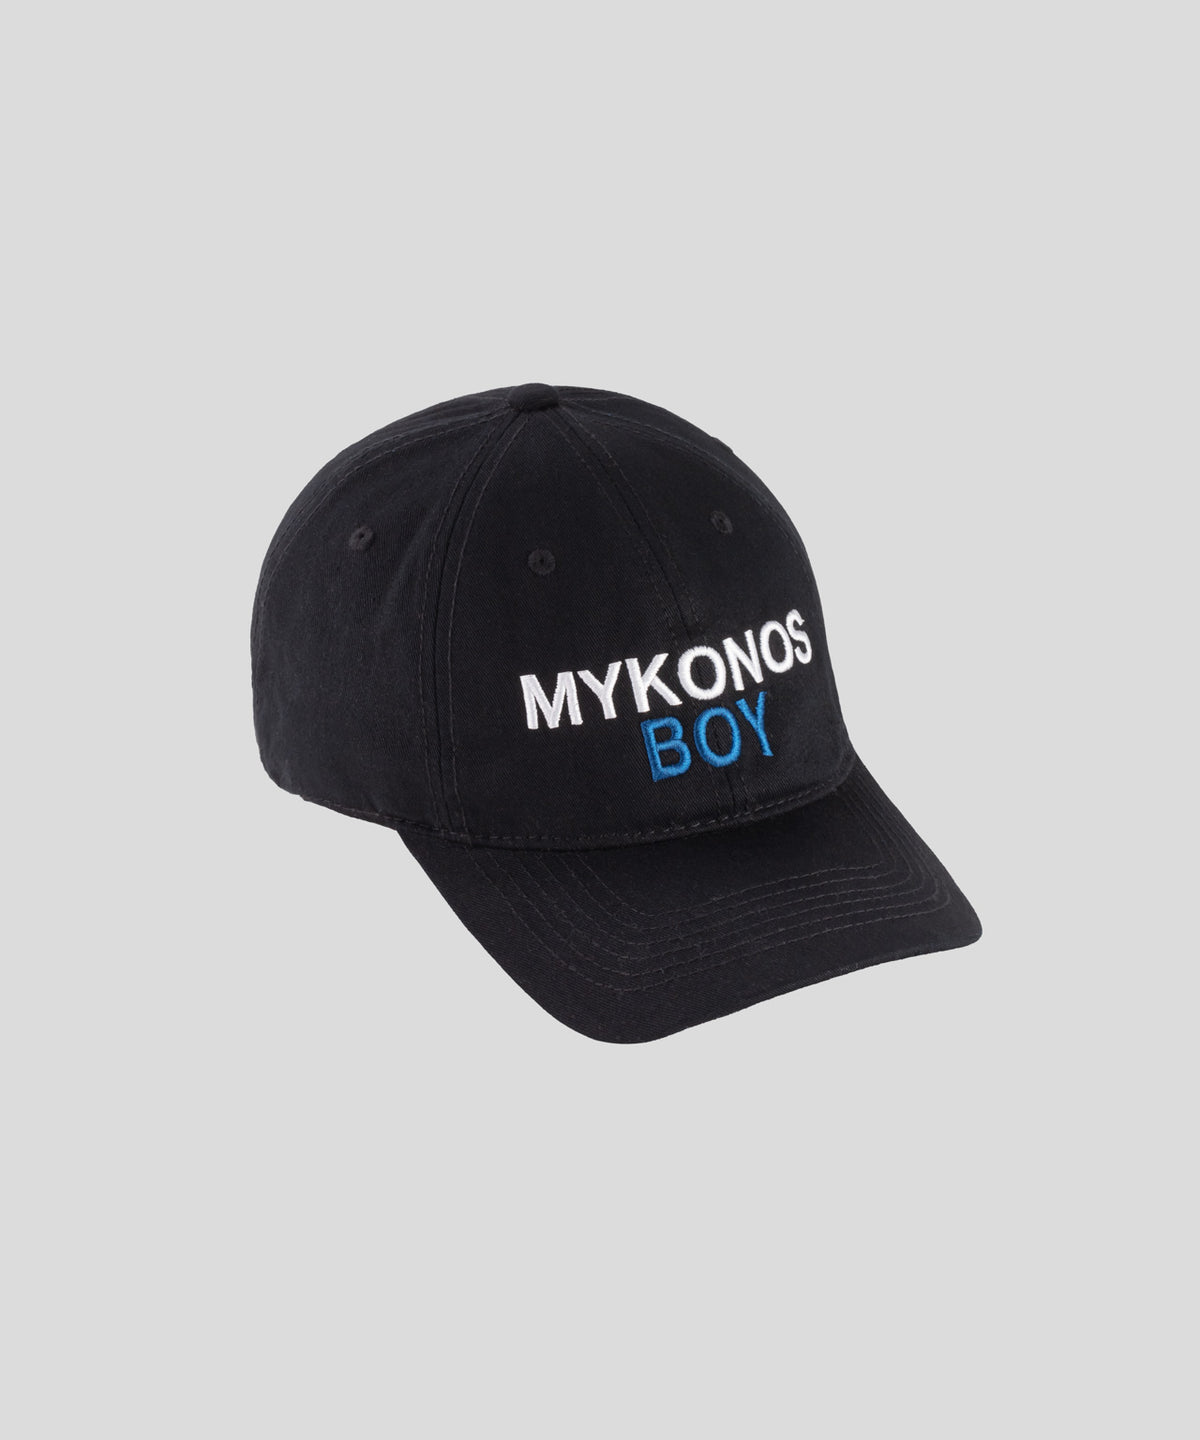 Cotton Coach Cap MYKONOS BOY: Black